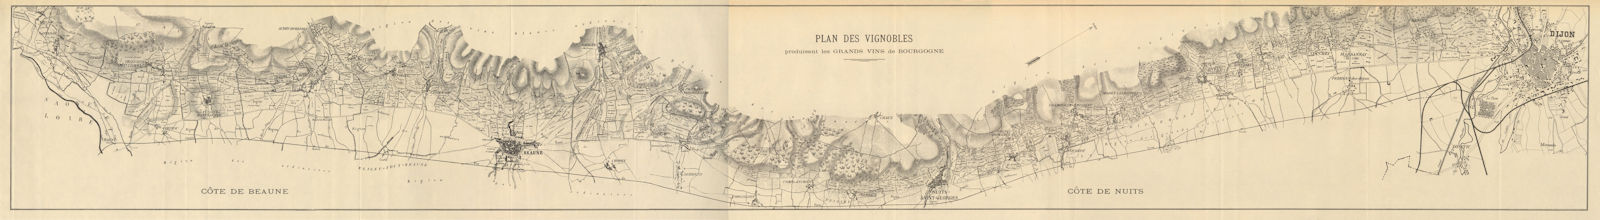 Vignobles Grands Vins de Bourgogne. Côte d'Or. Burgundy wine map. RODIER 1935